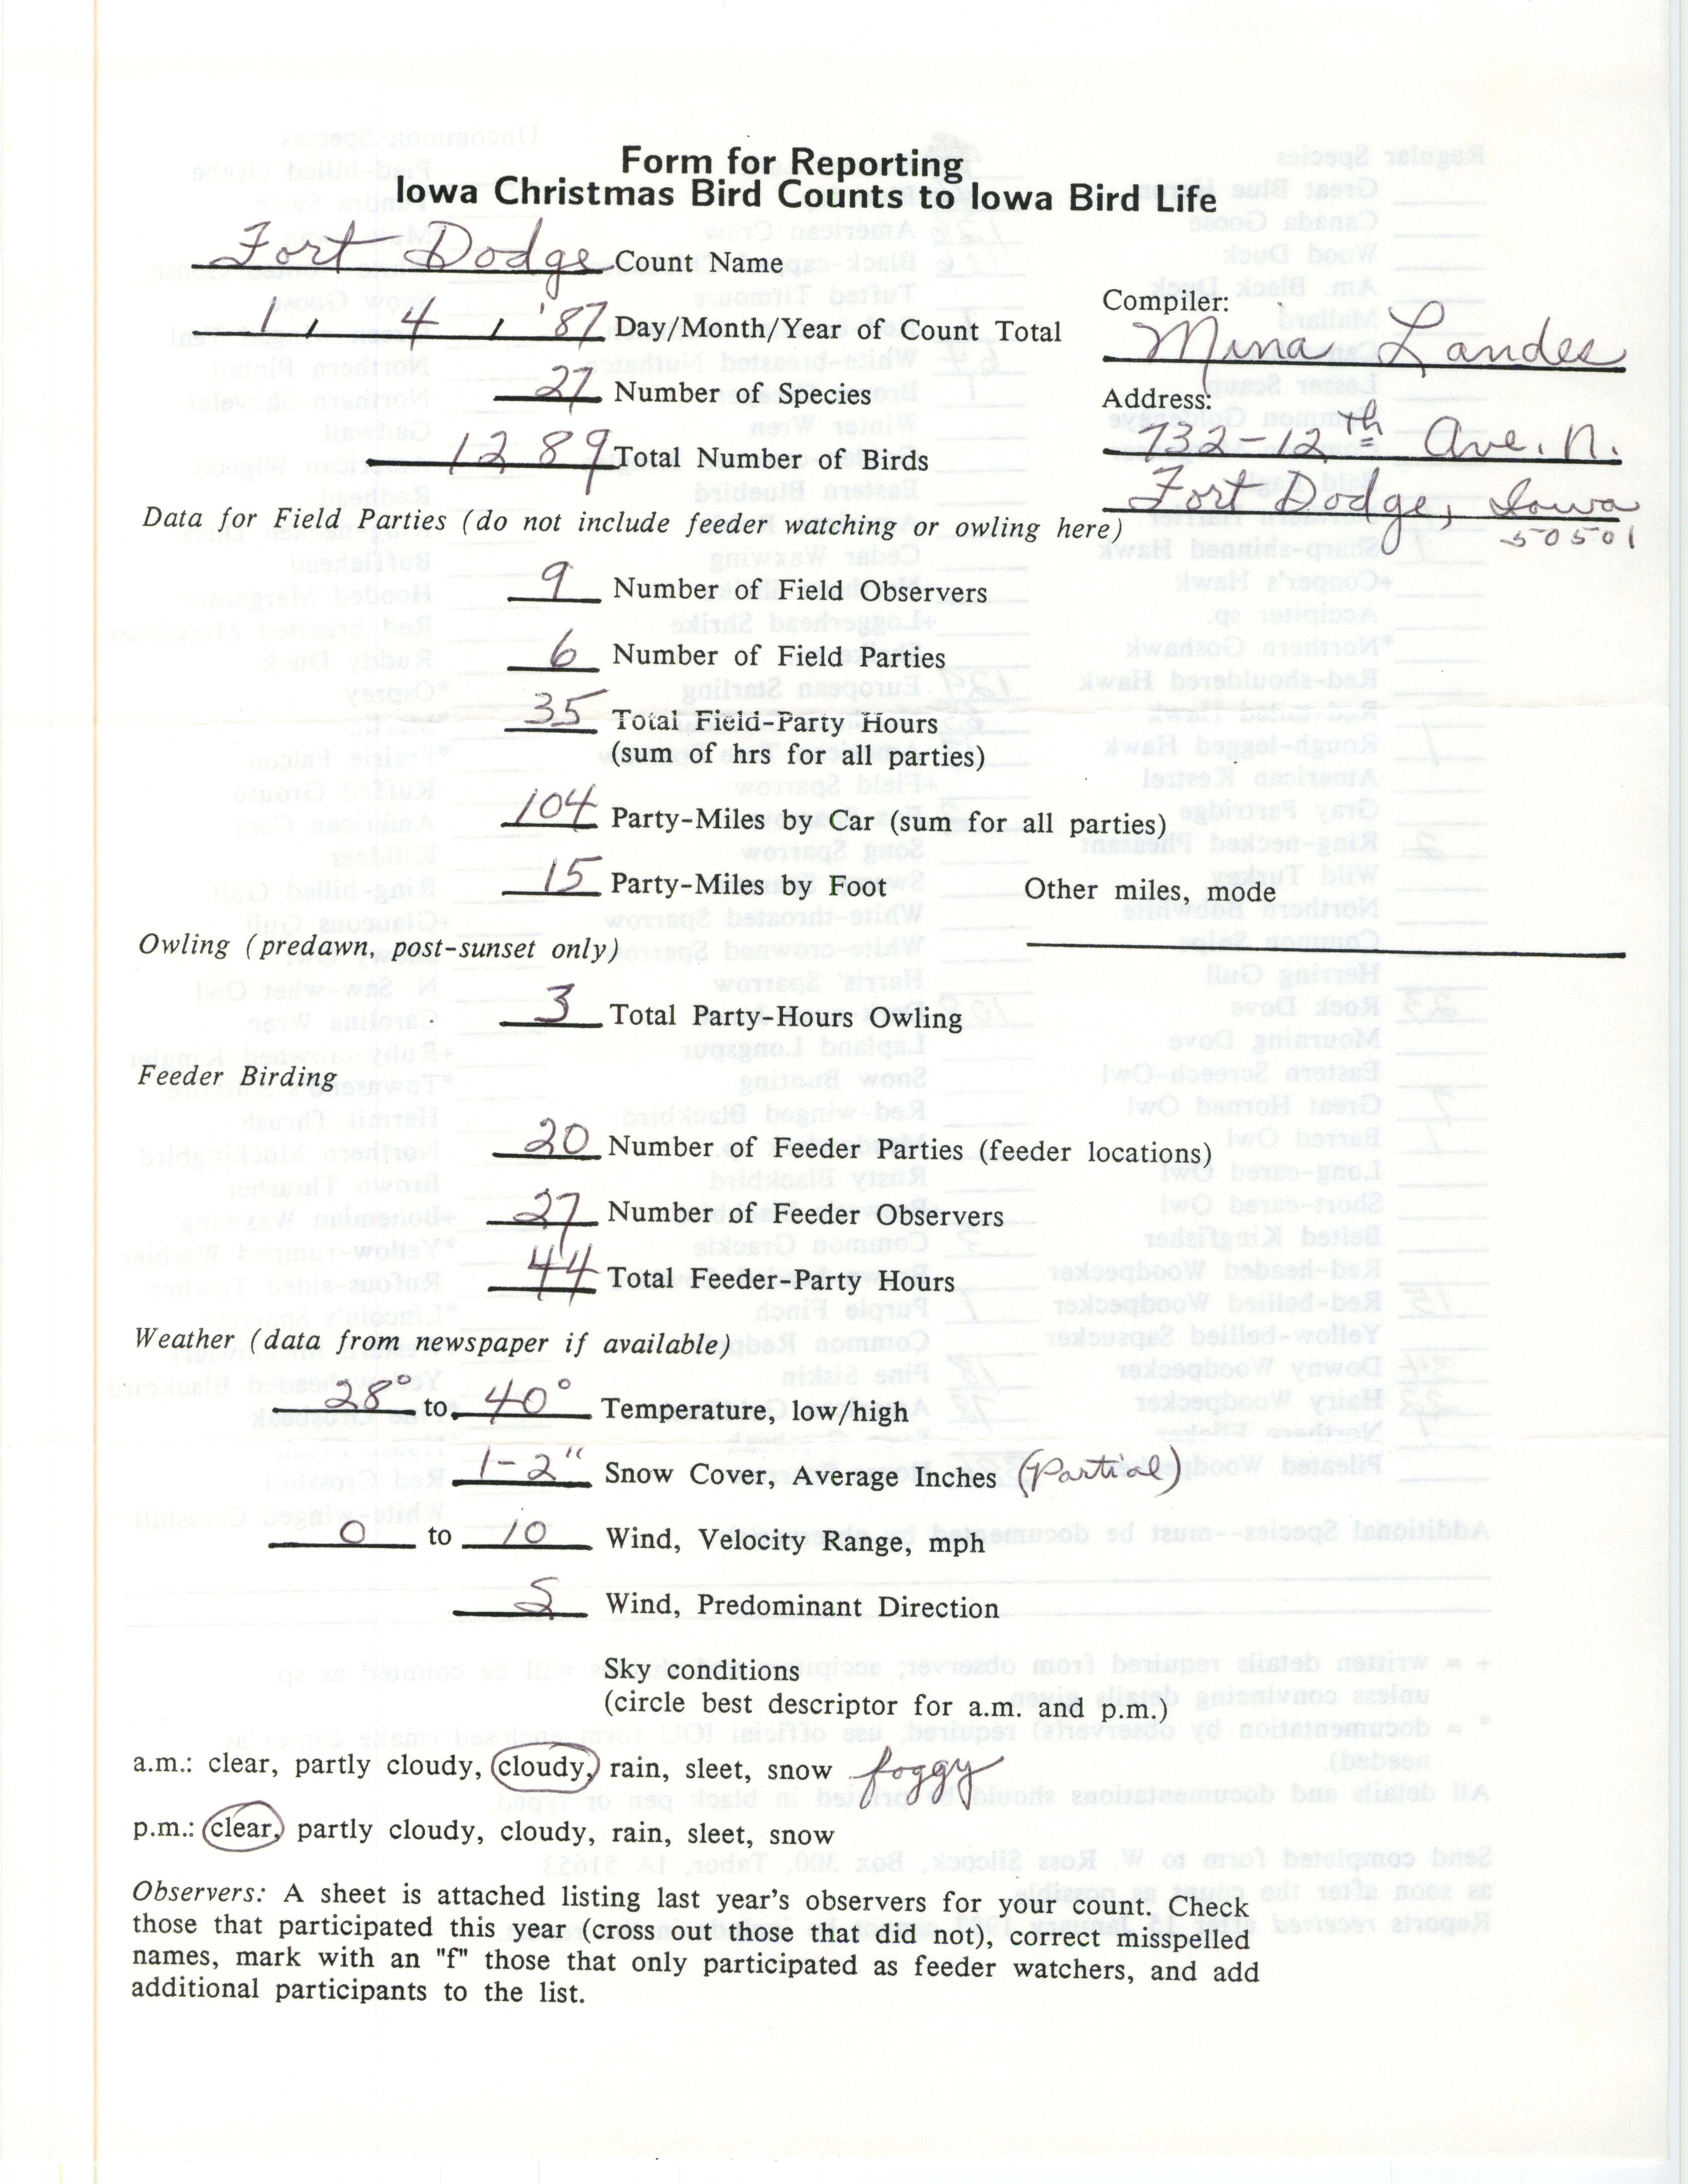 Form for reporting Iowa Christmas bird counts to Iowa Bird Life, Mina Landes, January 4, 1987